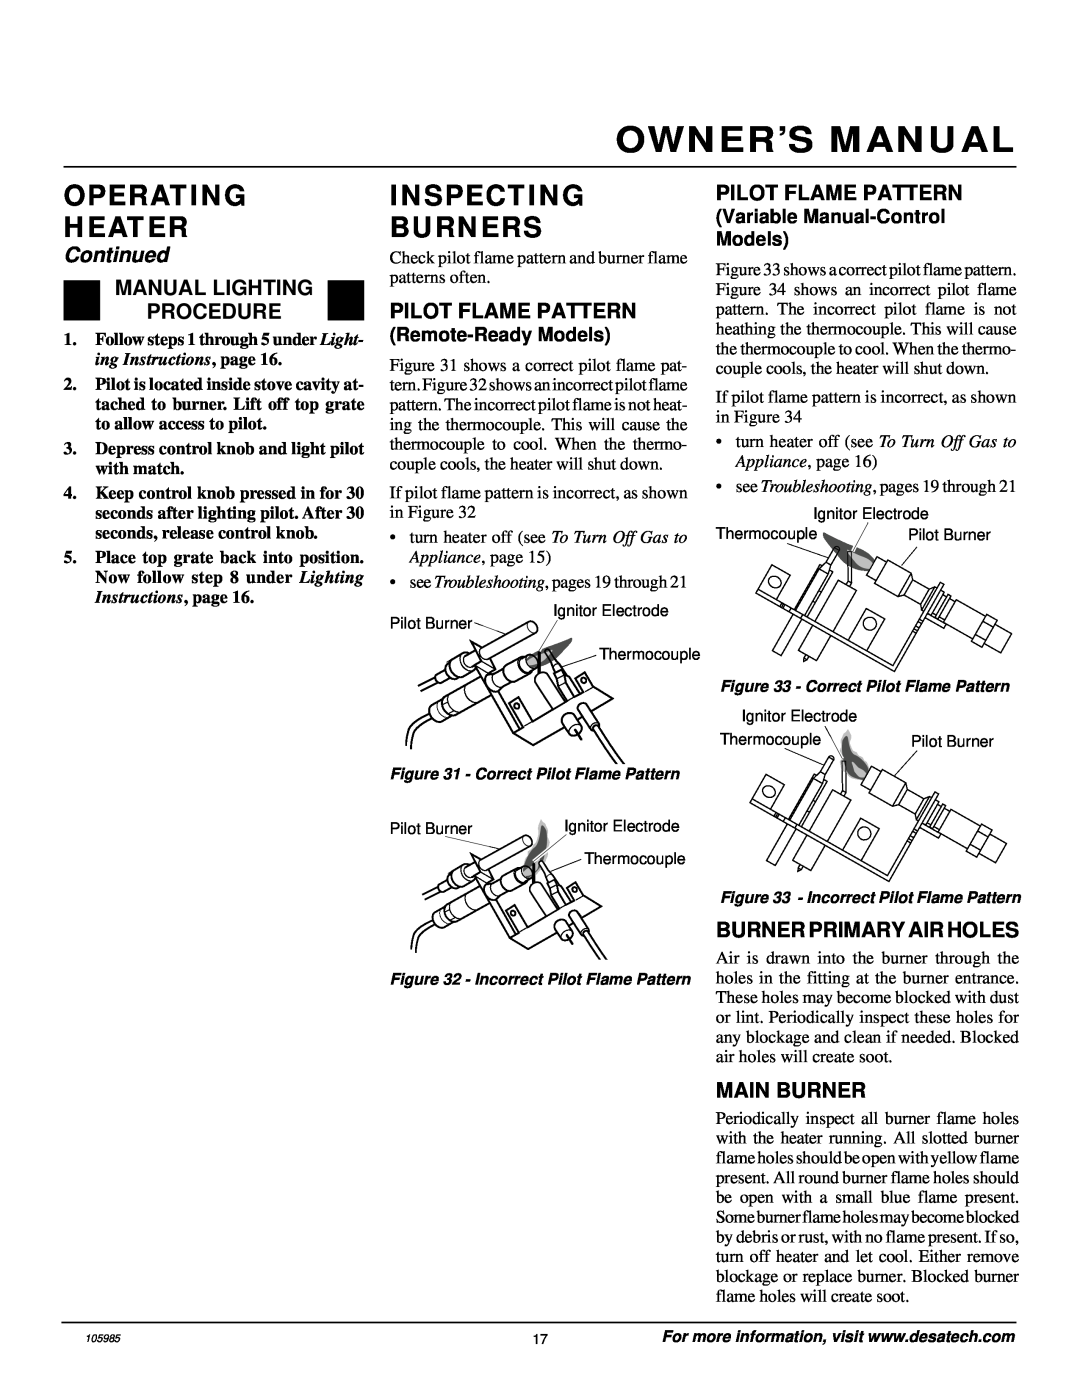 Desa MSVFBNR Series Inspecting Burners, Pilot Flame Pattern, Burner Primary Air Holes, Main Burner, Owner’S Manual 